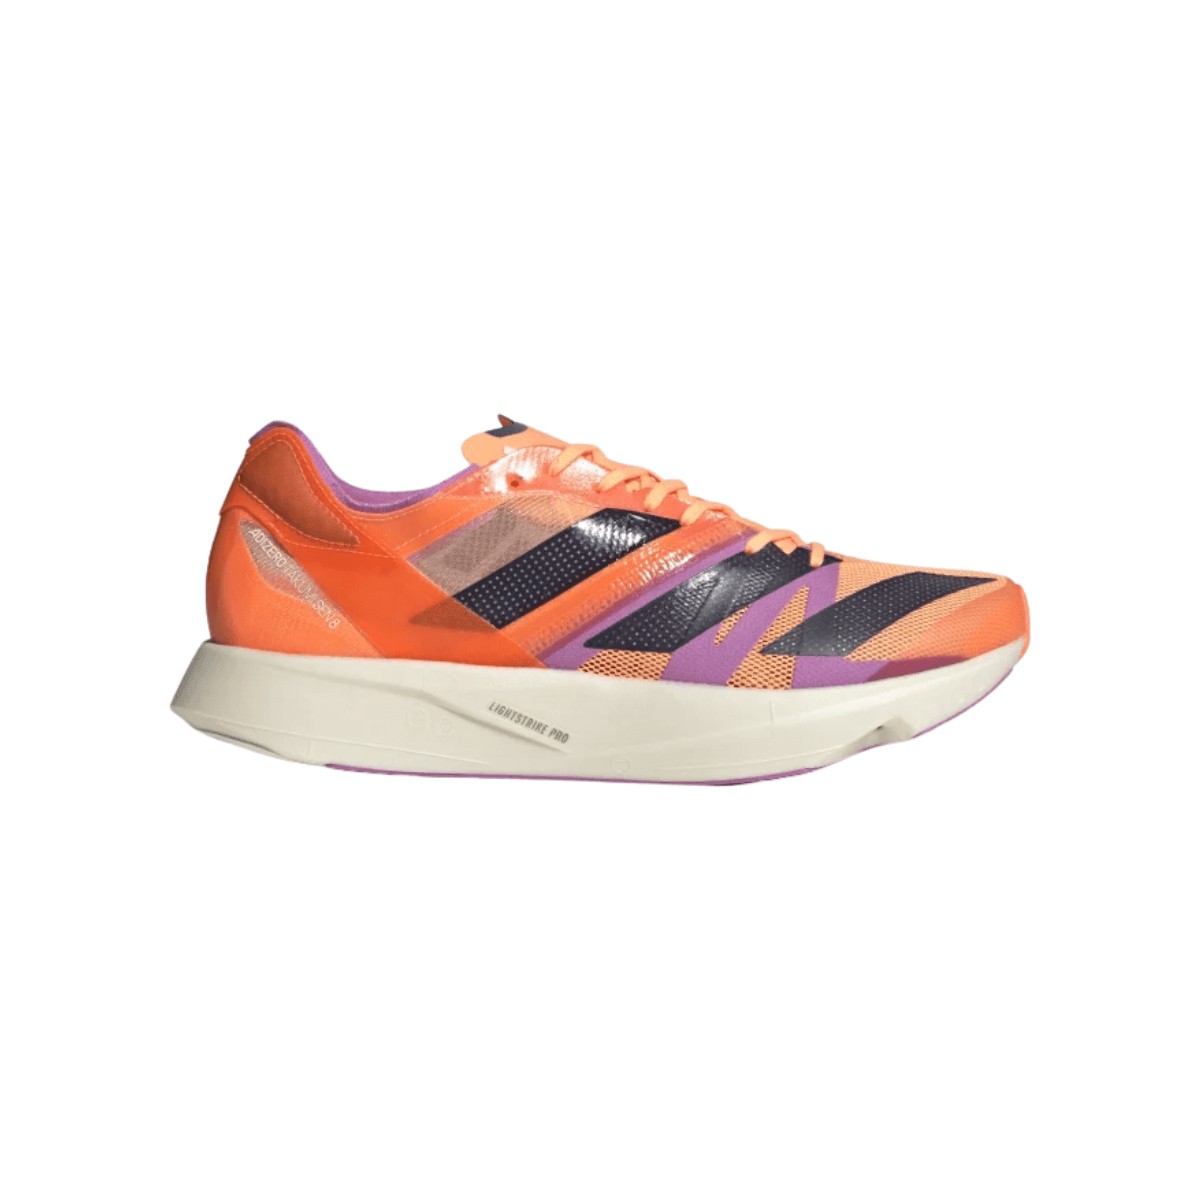 Adidas Adizero Takumi Sen 8 Shoes Purple Orange, Size UK 8